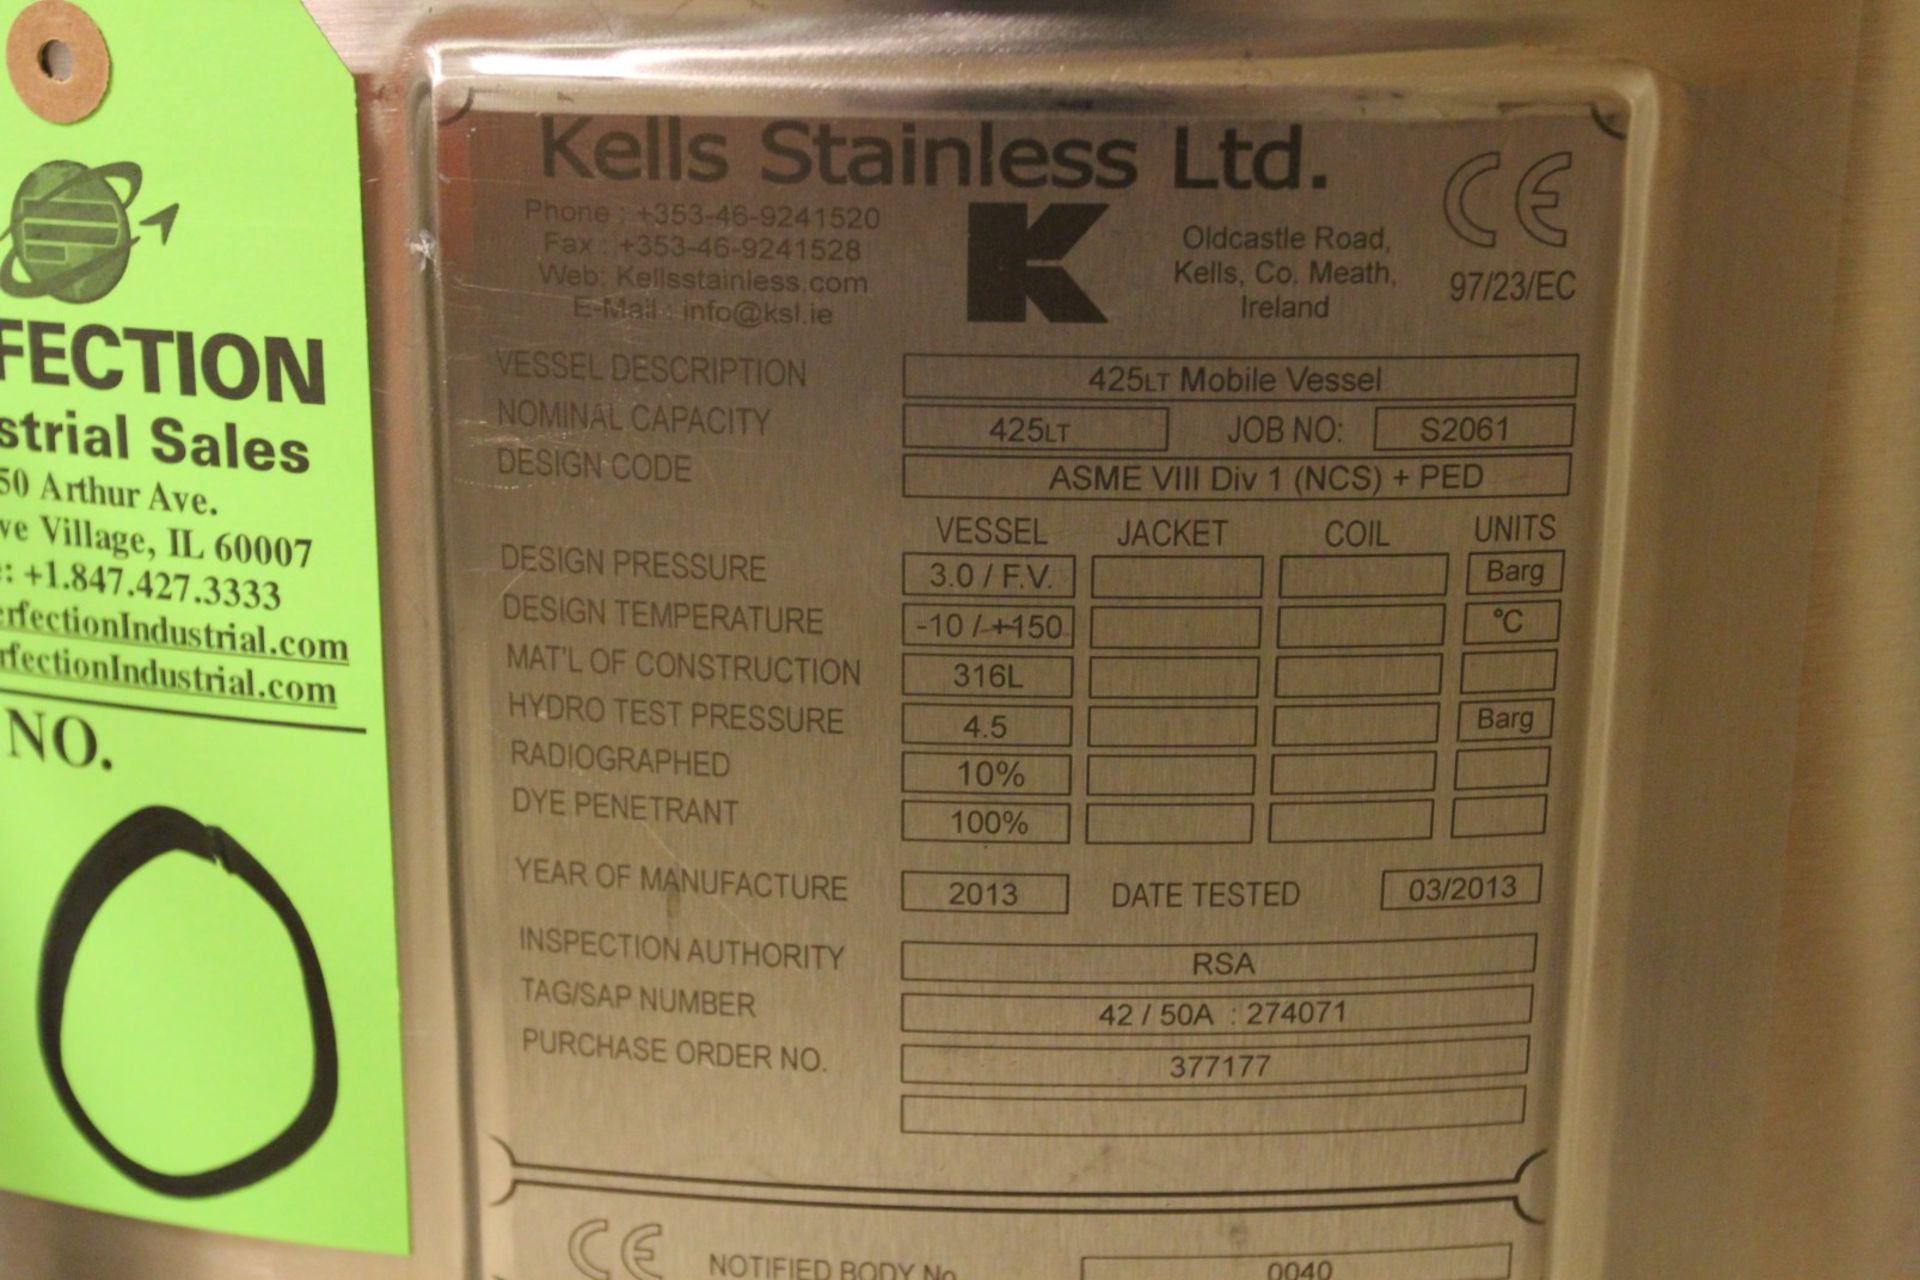 2013 Kells Stainless 425LT Mobile Vessel, Job No S2061, 425 Liter Capacity, 316L Stainless Steel - Image 4 of 4